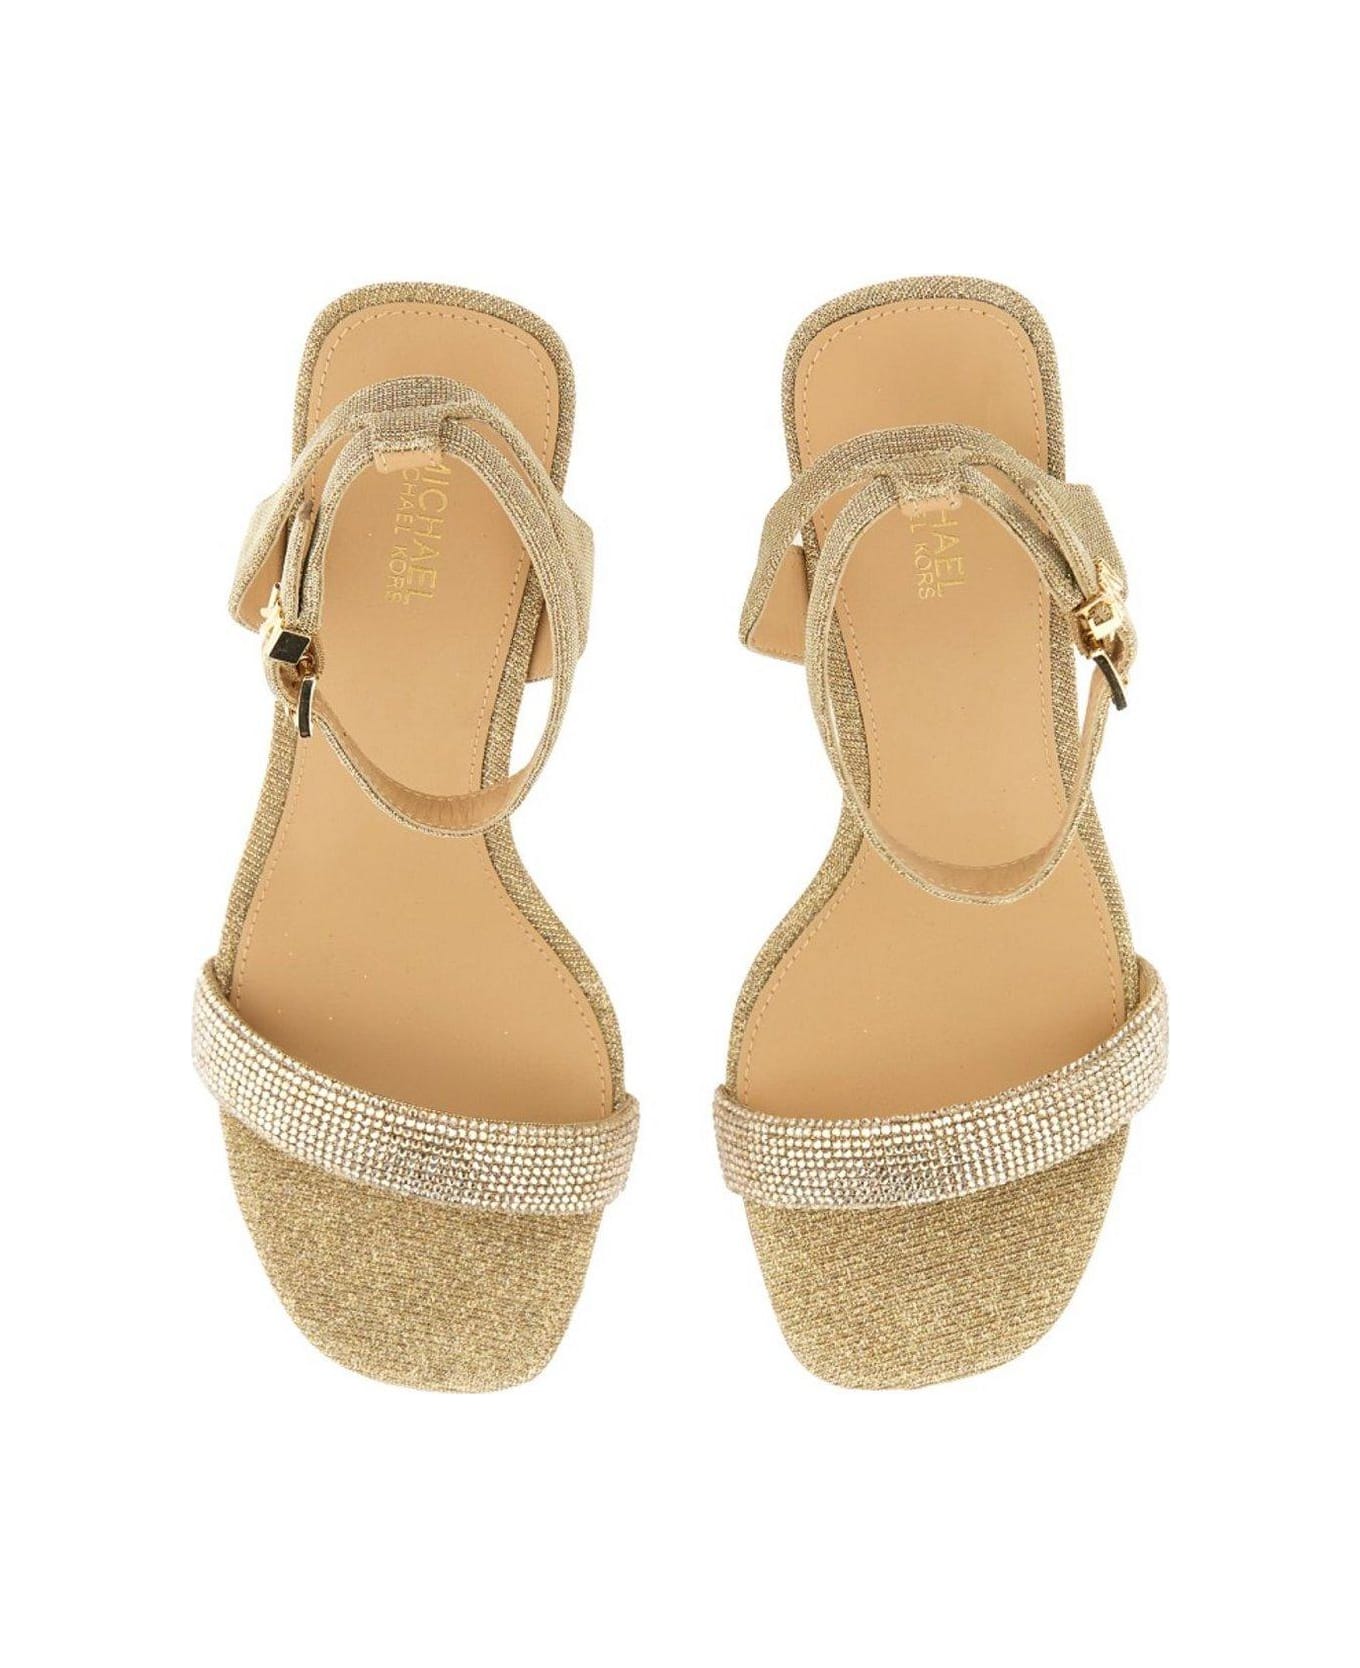 MICHAEL Michael Kors Carrie Rhinestoned Embellished Sandals - Pale Gold サンダル